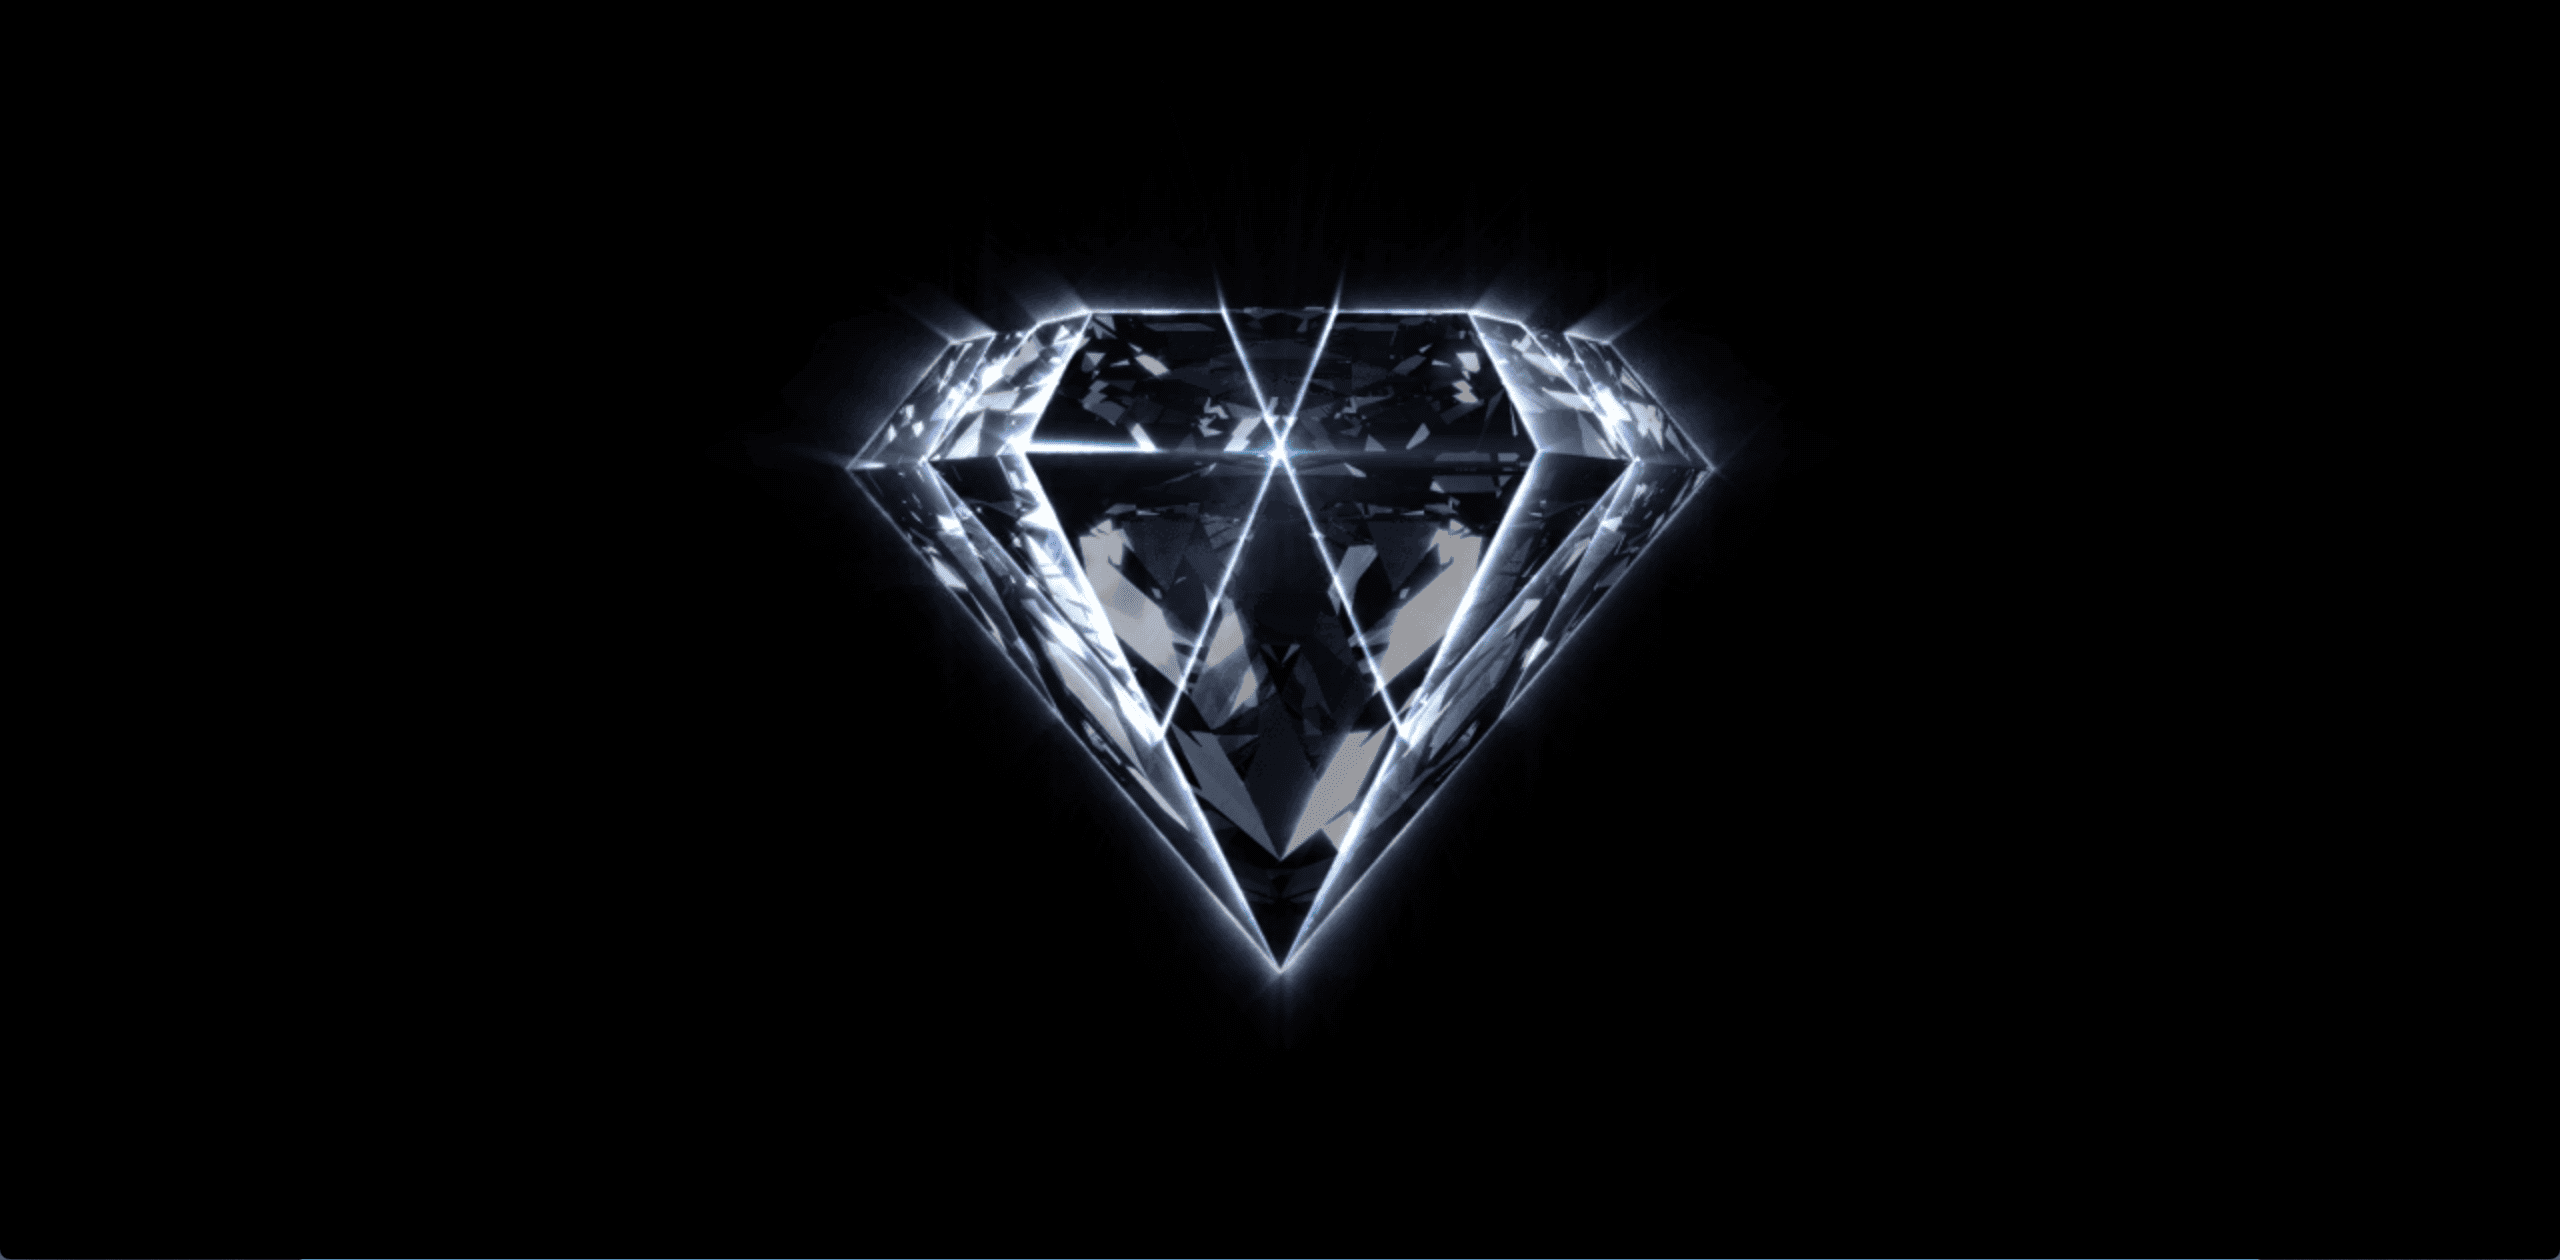 Exo Logo Wallpaper Black Diamond Light Darkness Black And White 1007532 Wallpaperuse